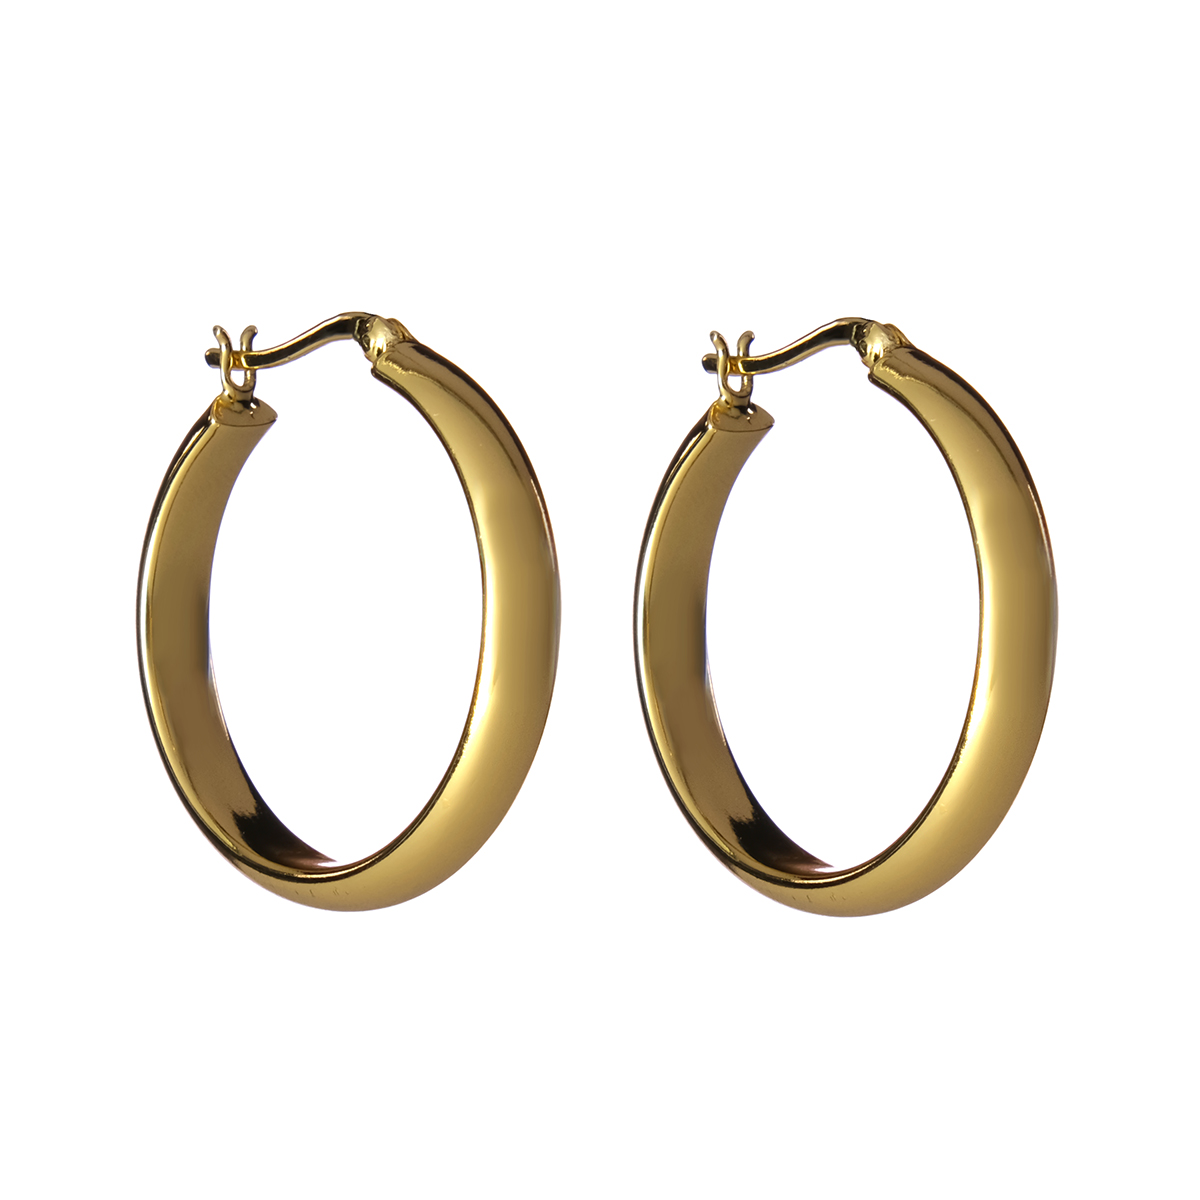 Danecraft 24kt. Gold Over Sterling 30mm Hoop Earrings